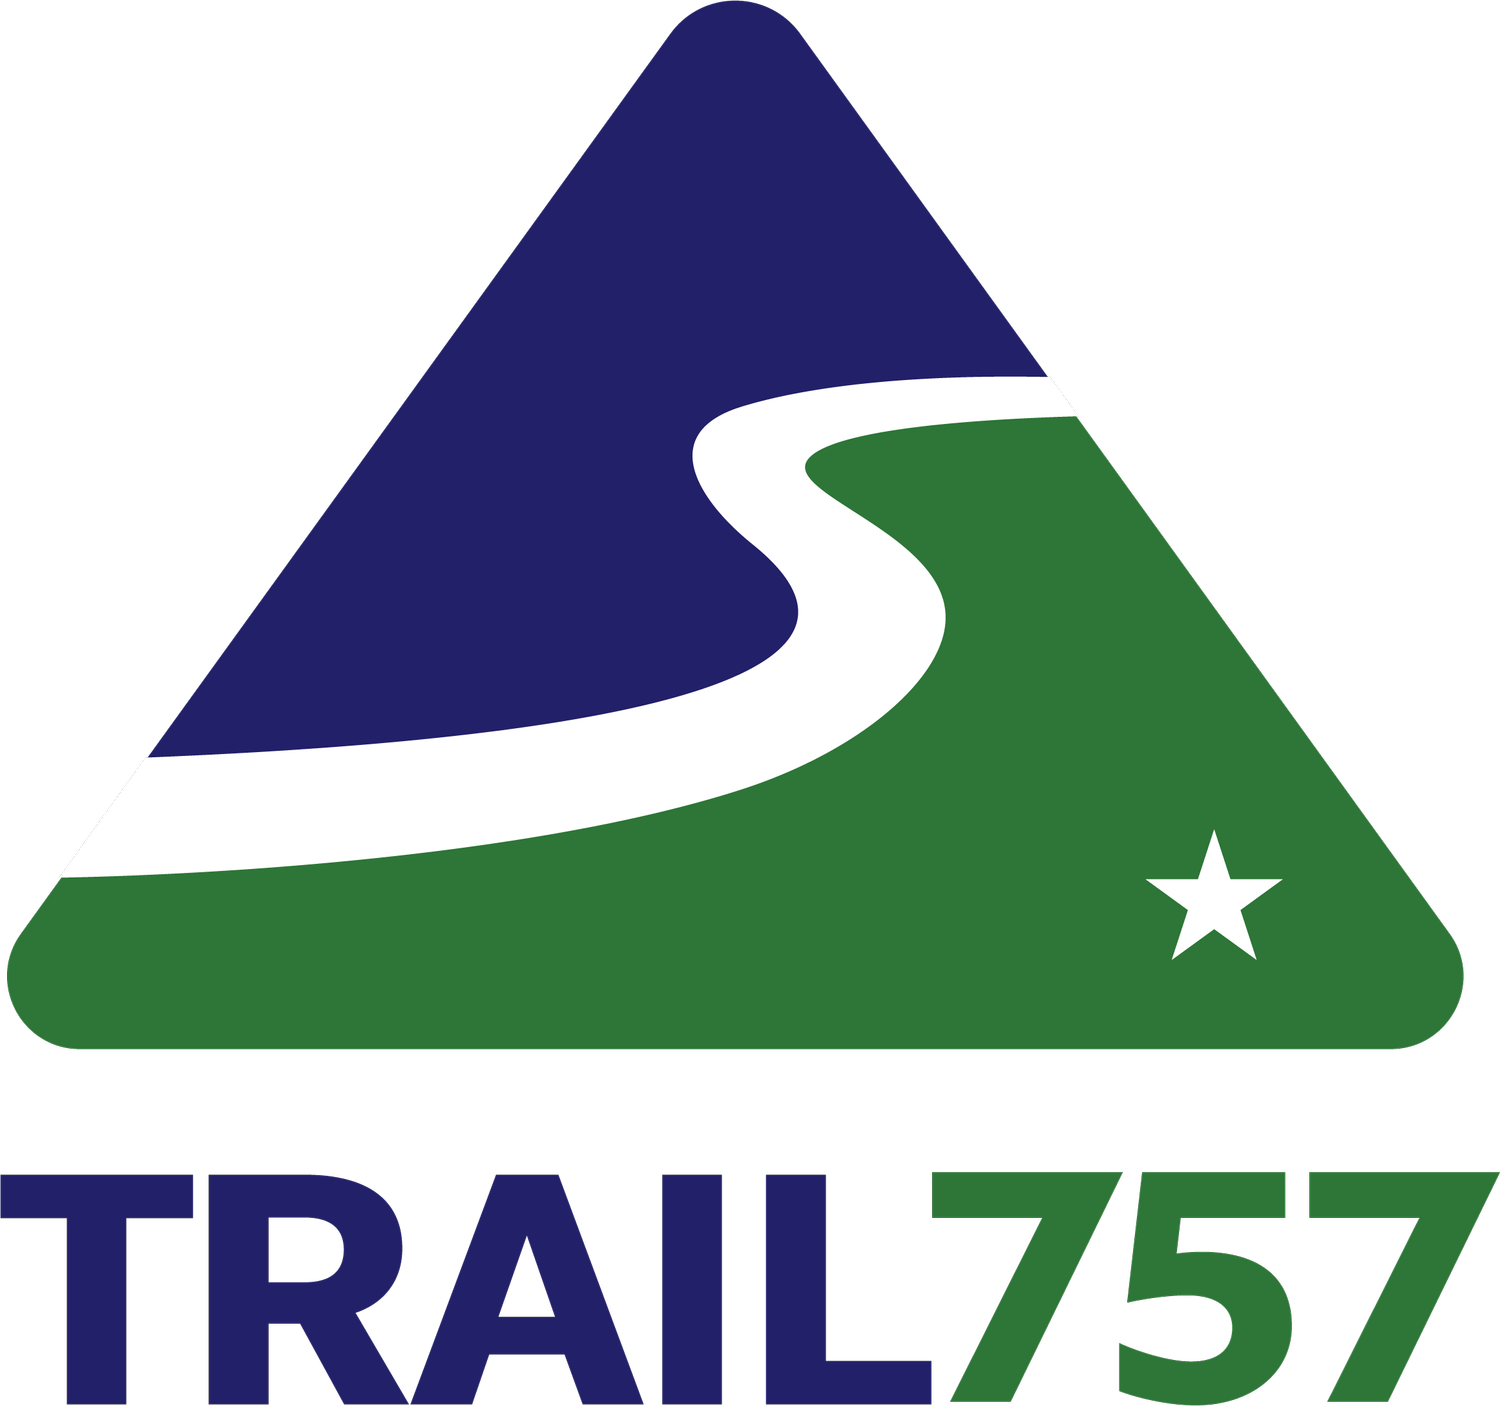 Trail 757